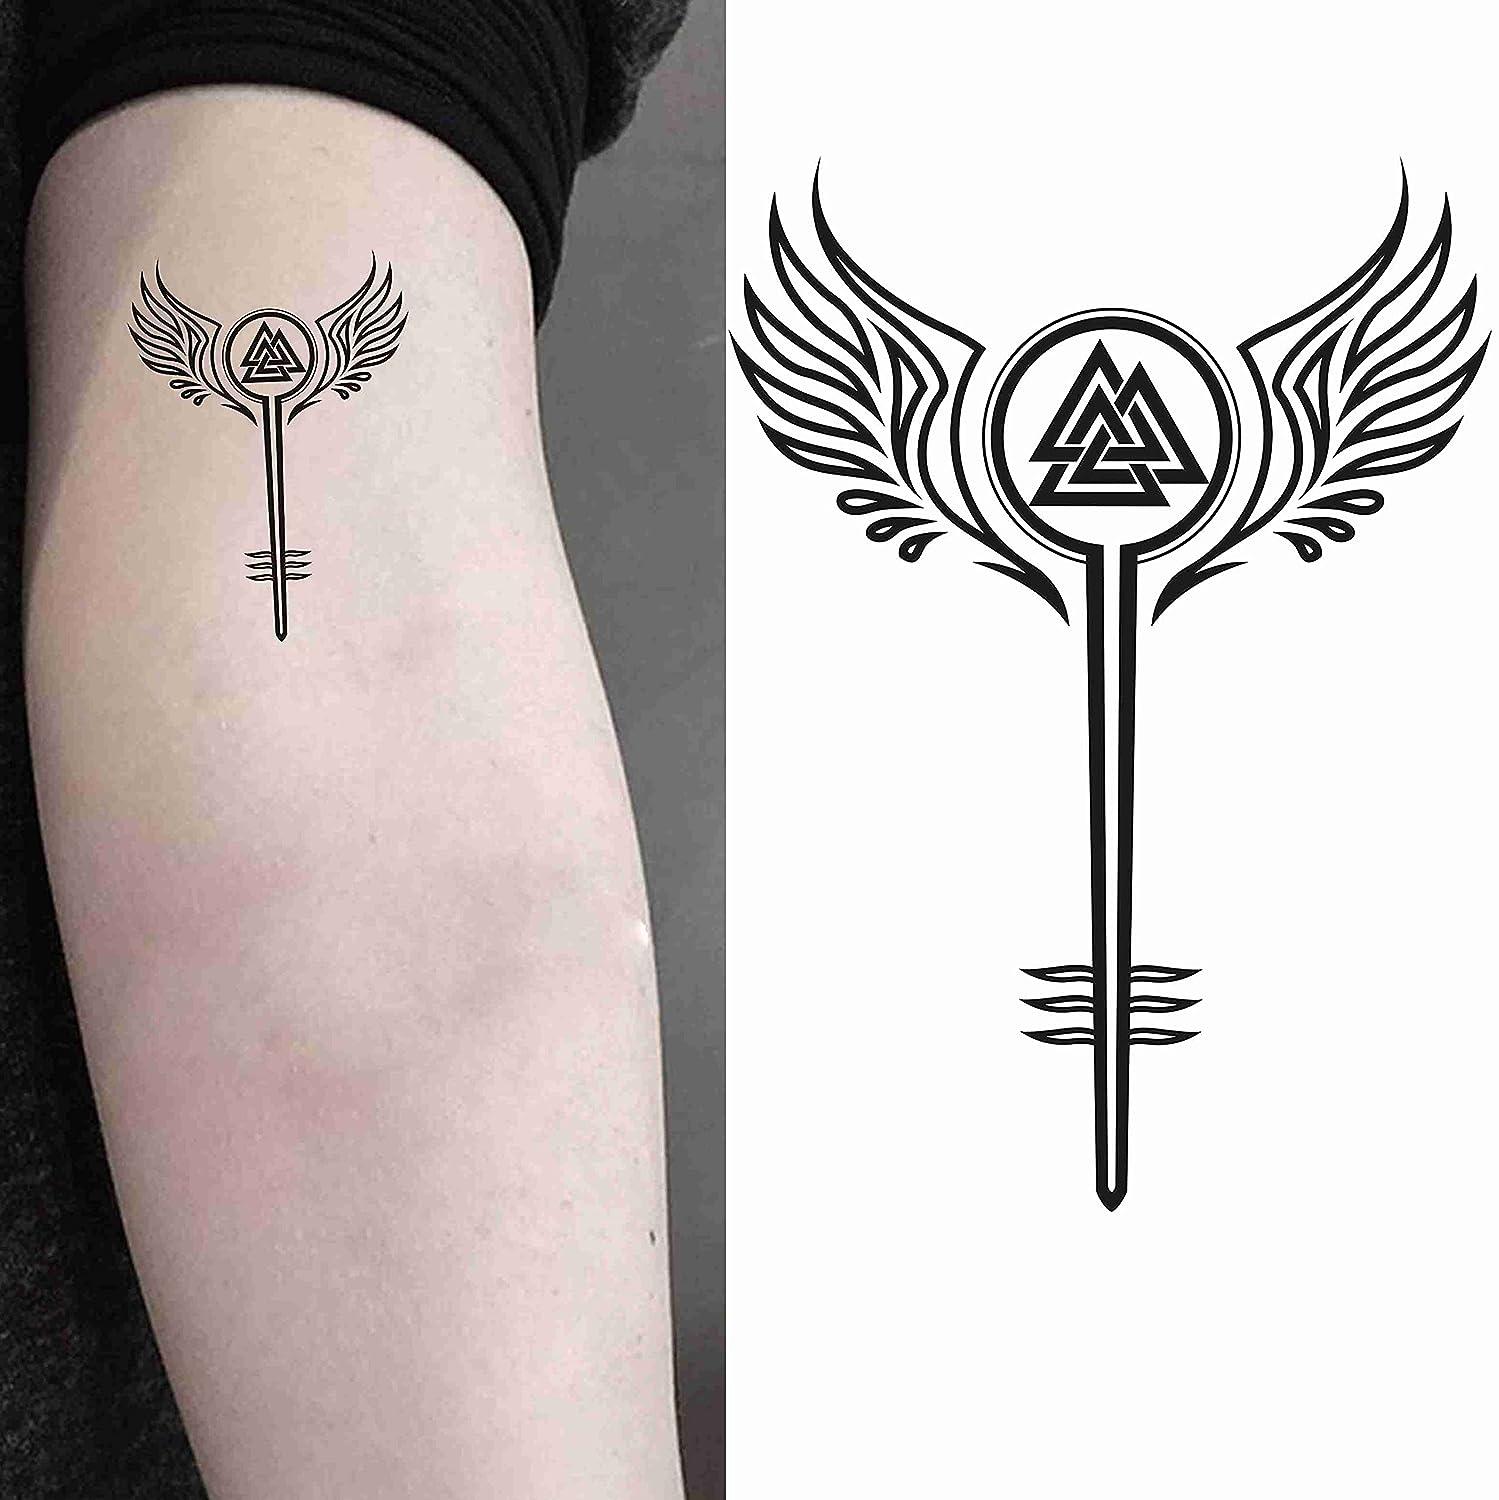 Tattoo of Vikings